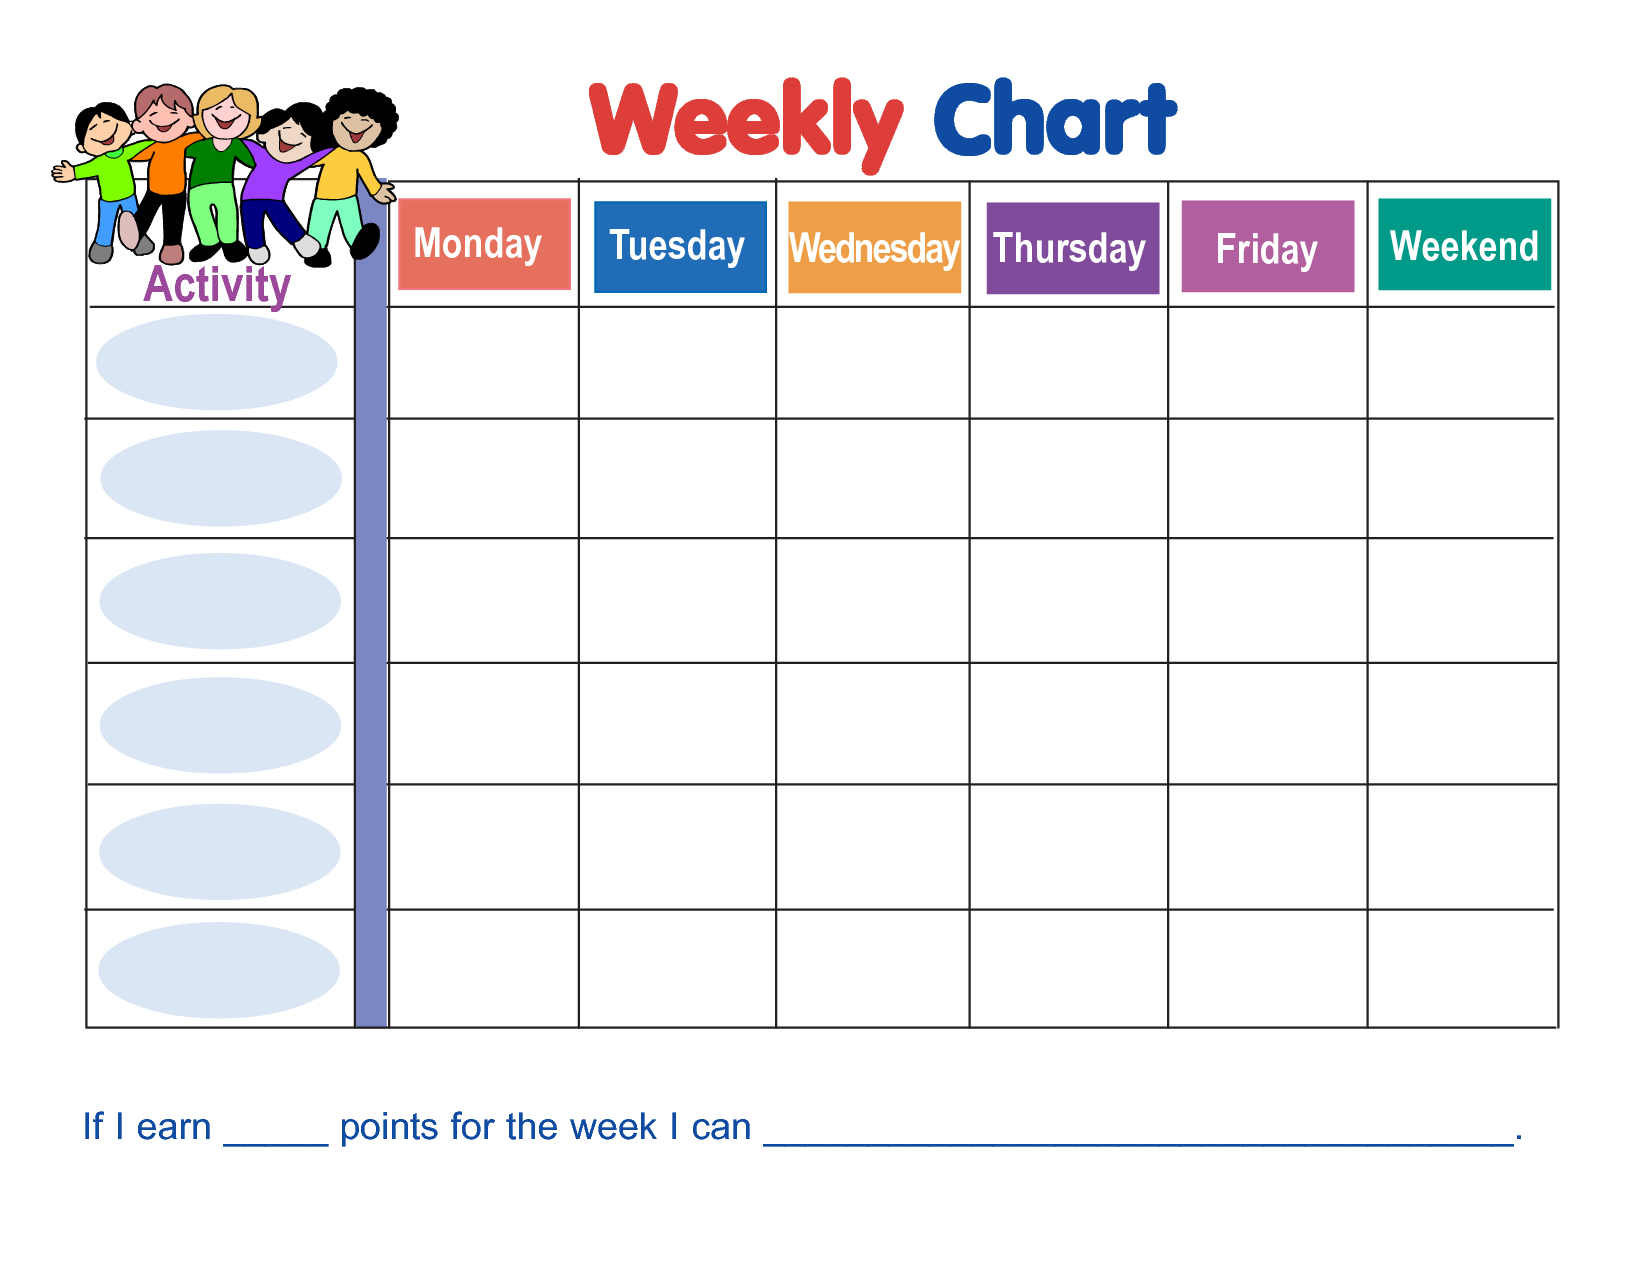 Weekend activities. Лист поощрений для детей. Планер на неделю для детей. Weekly Schedule for Kids. Days of the week шаблон.